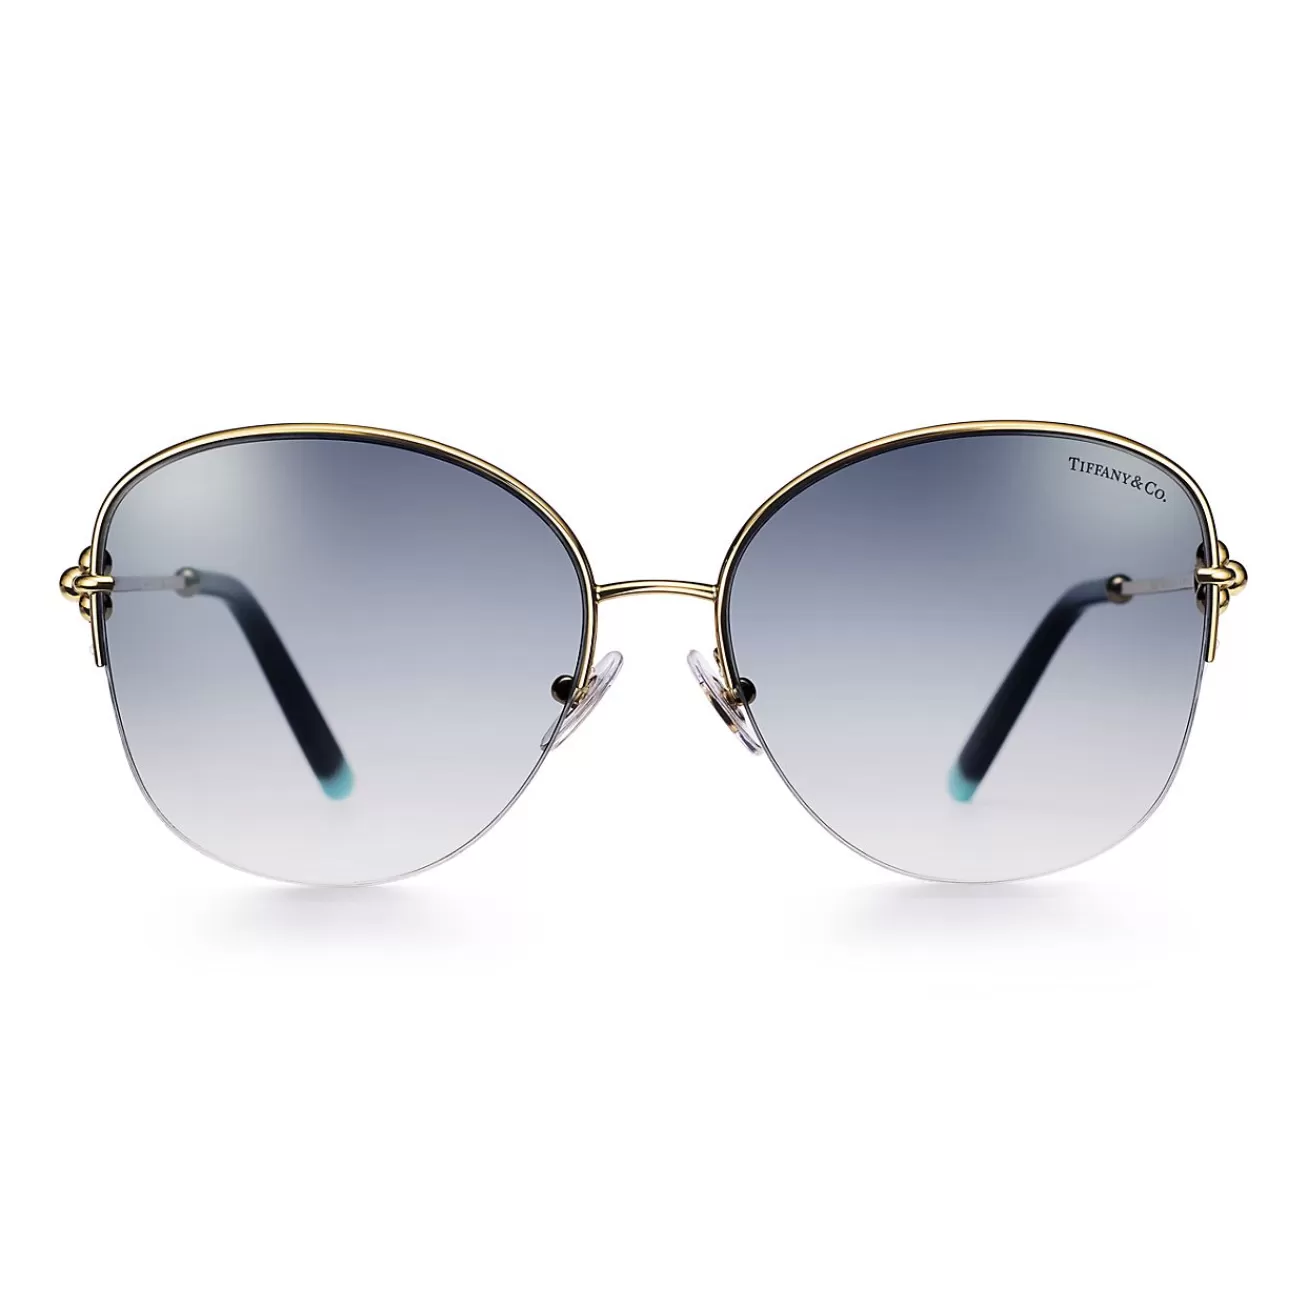 Tiffany & Co. Tiffany HardWear Sunglasses in Pale Gold-colored Metal with Blue Lenses | ^ Tiffany HardWear | Sunglasses